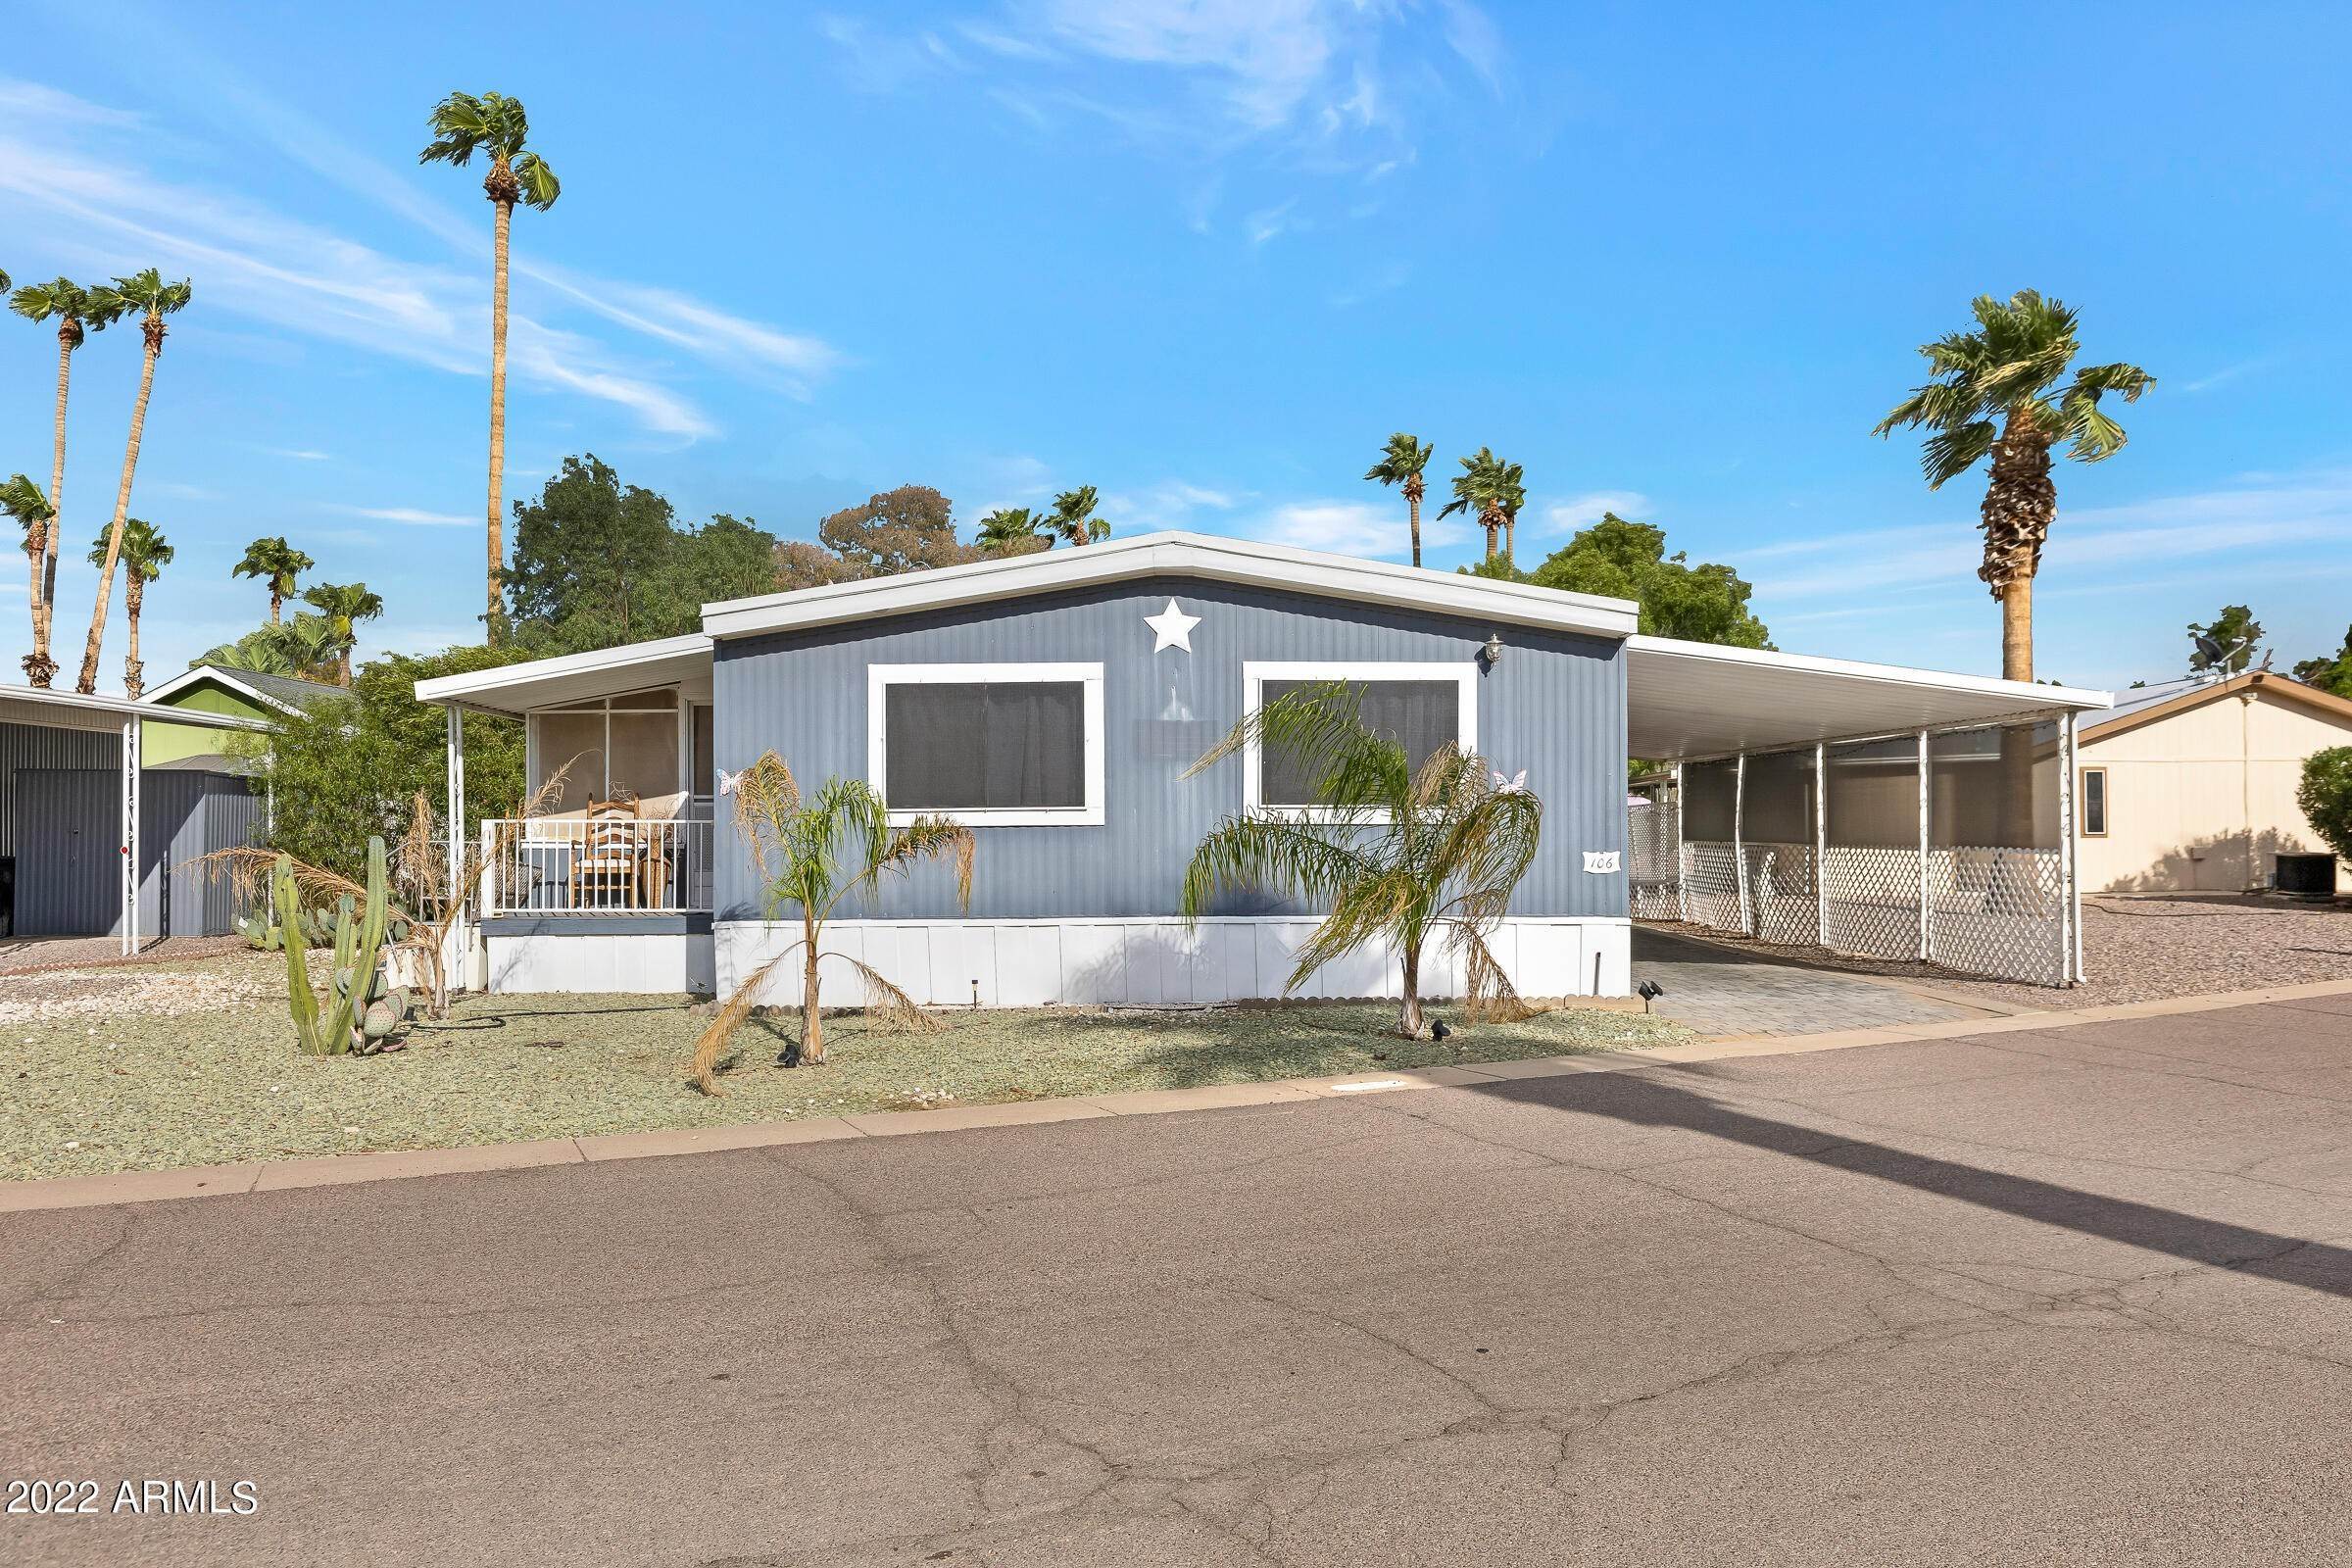 19. Mobile Home for Sale at Mesa, AZ 85206